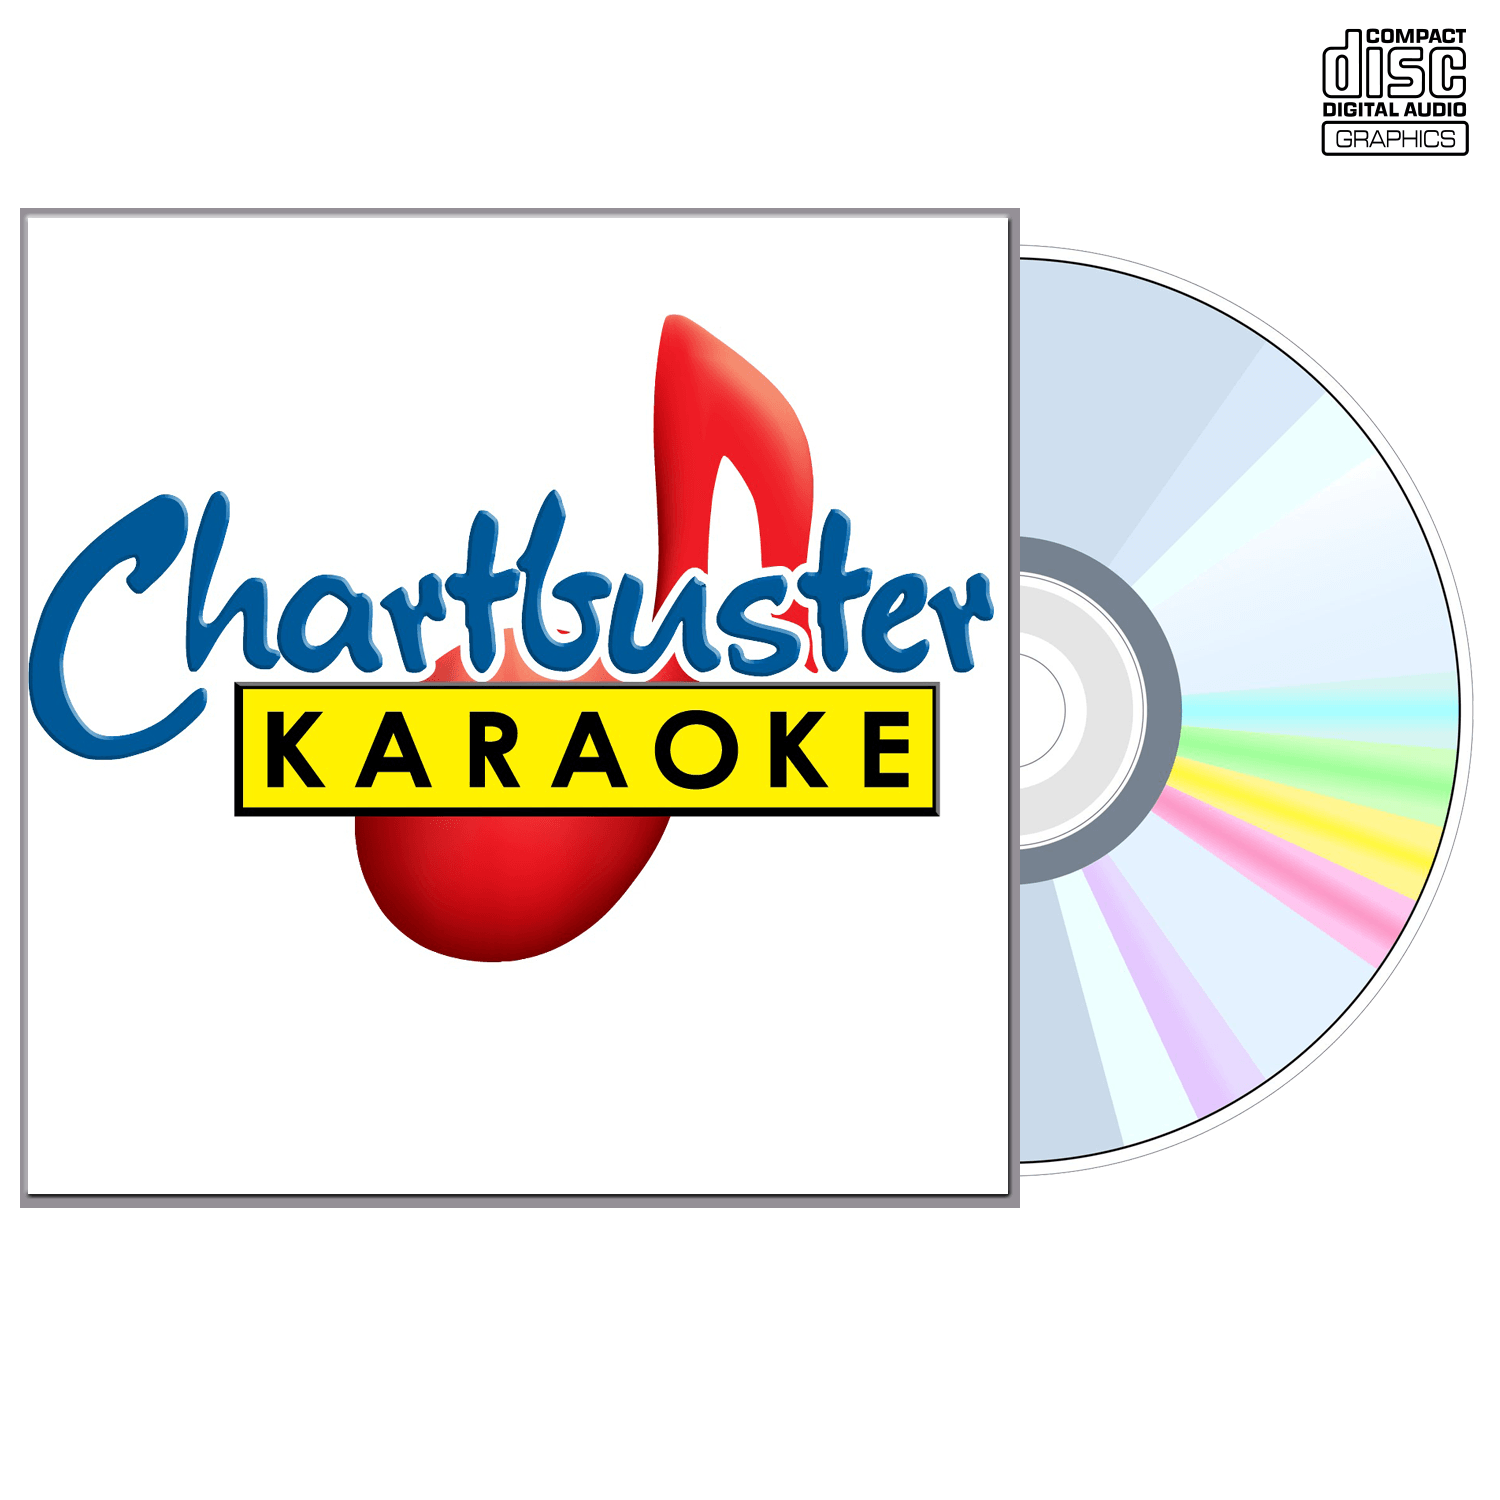 Garth Brooks Vol 3 - CD+G - Chartbuster Karaoke - Karaoke Home Entertainment